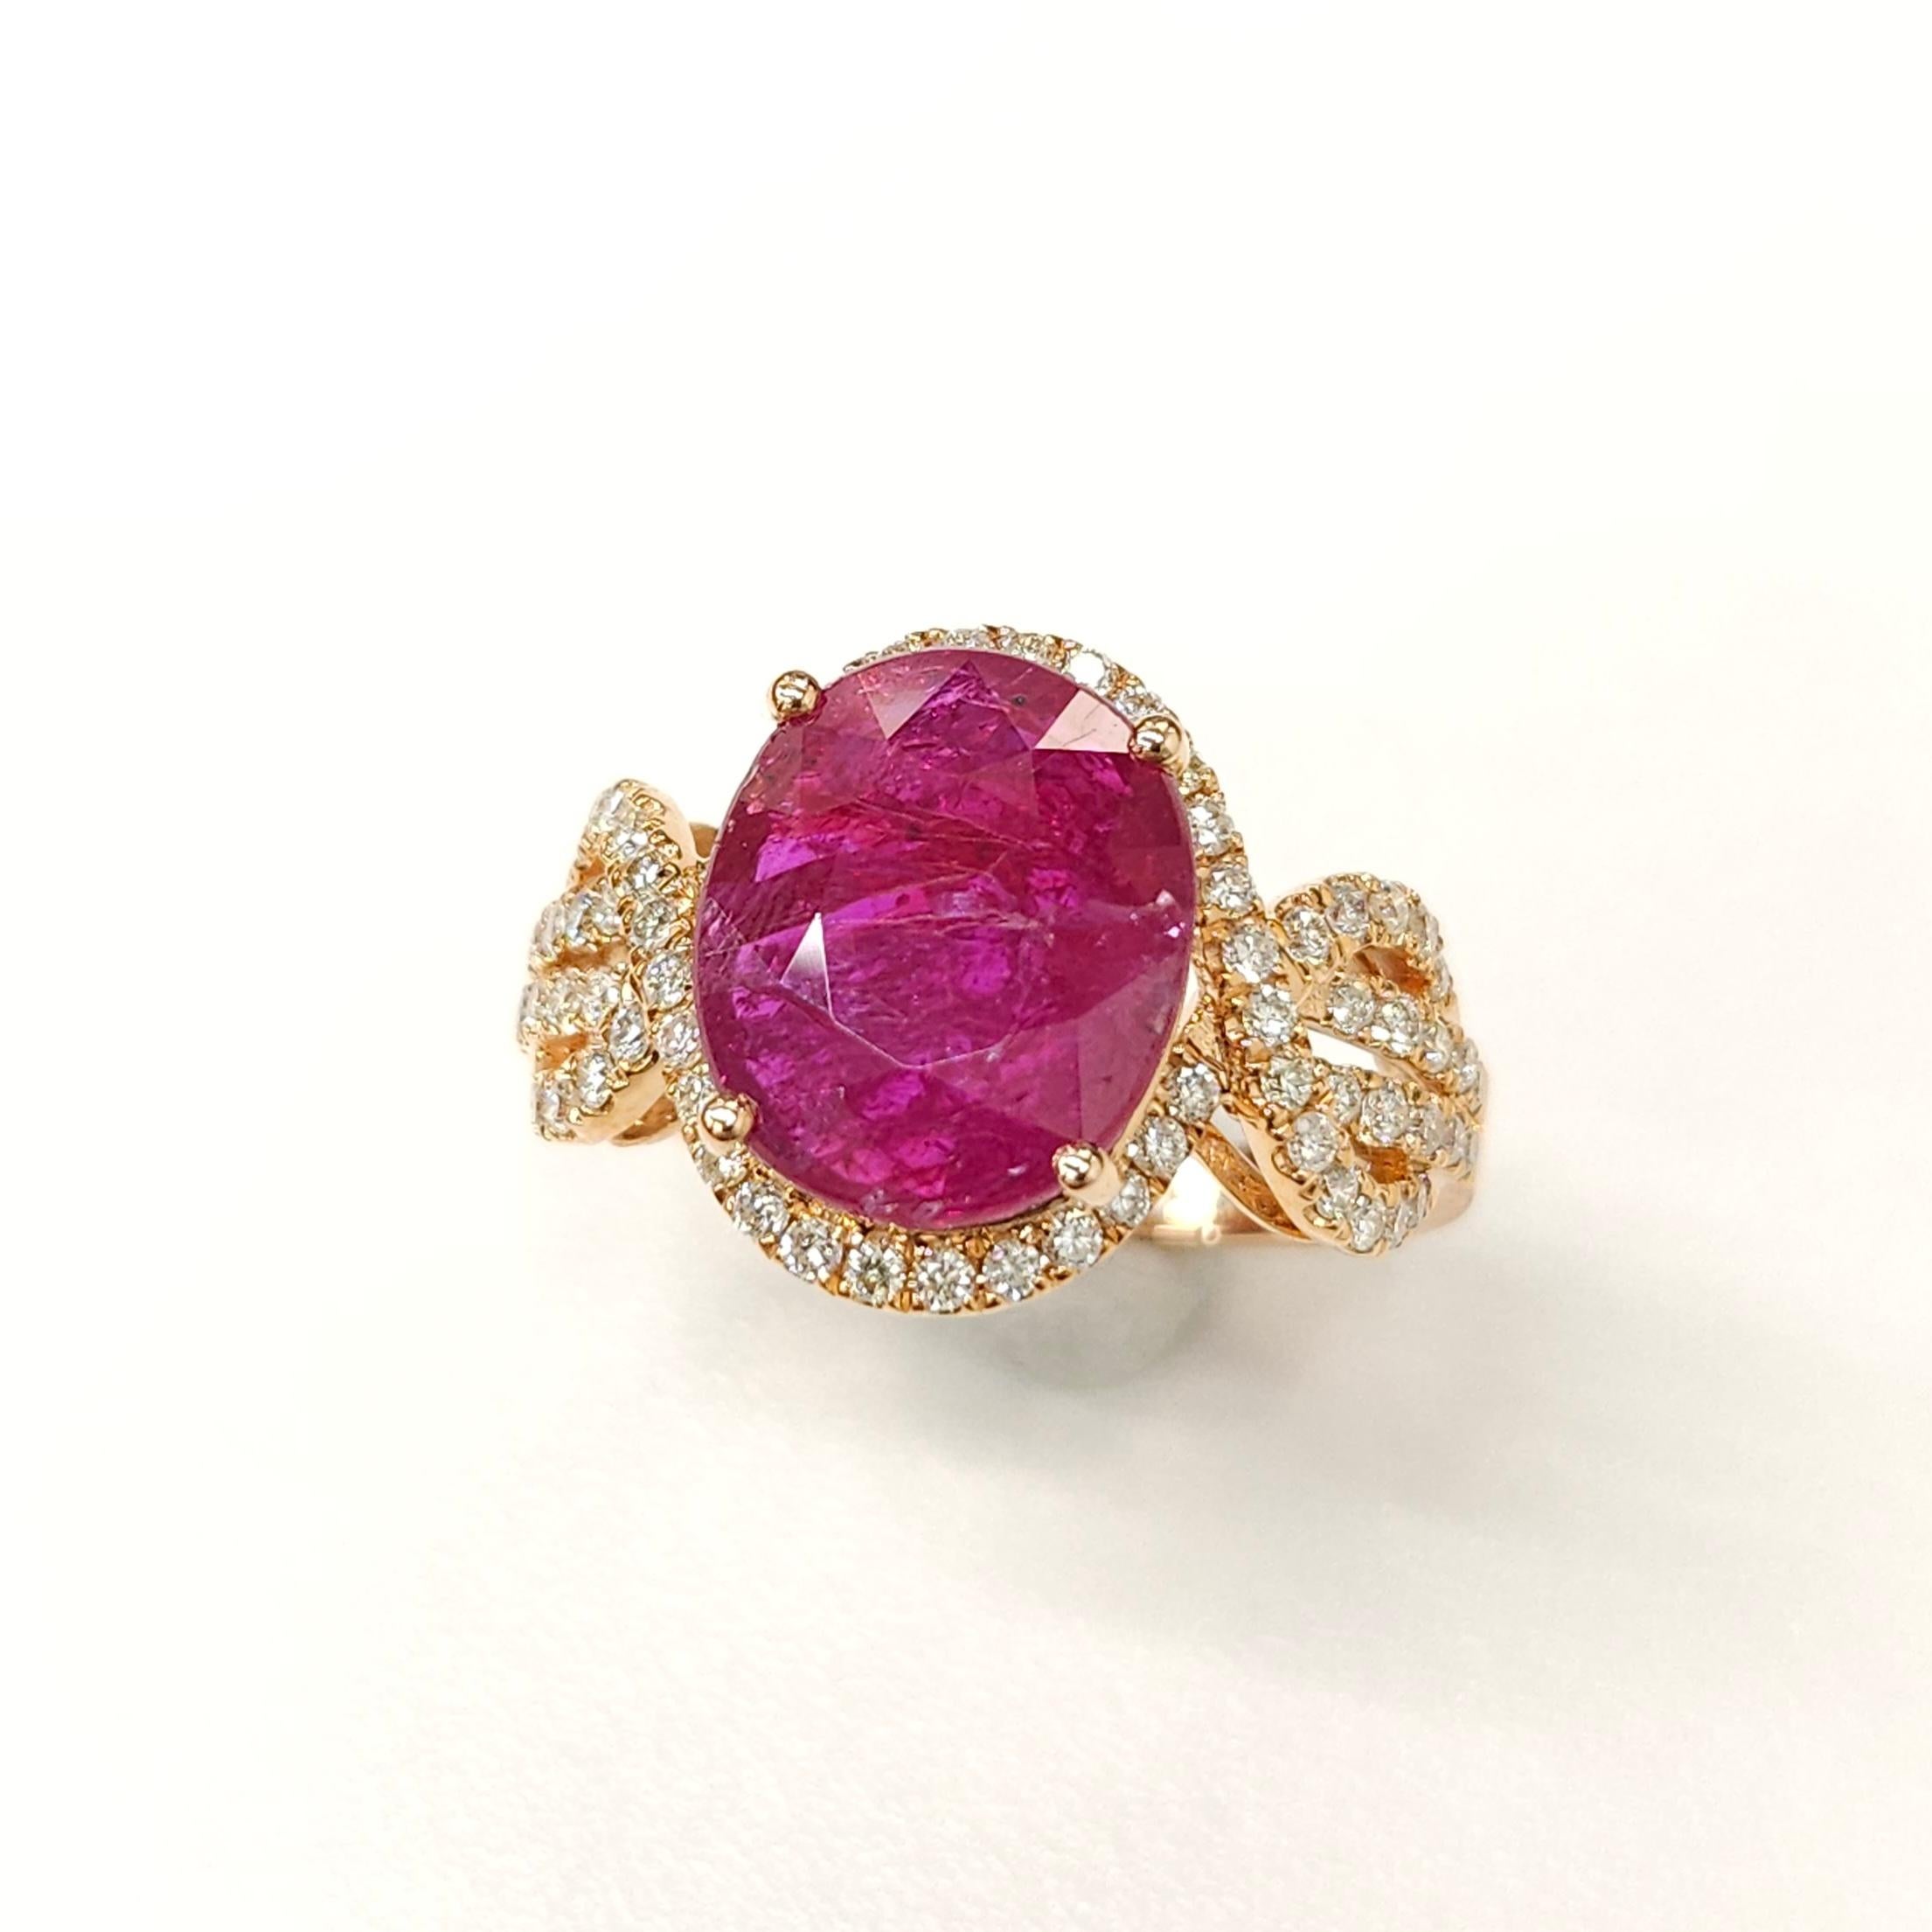 IGI Certified 4.02 Carat Ruby & Diamond Ring in 18K Rose Gold For Sale 2